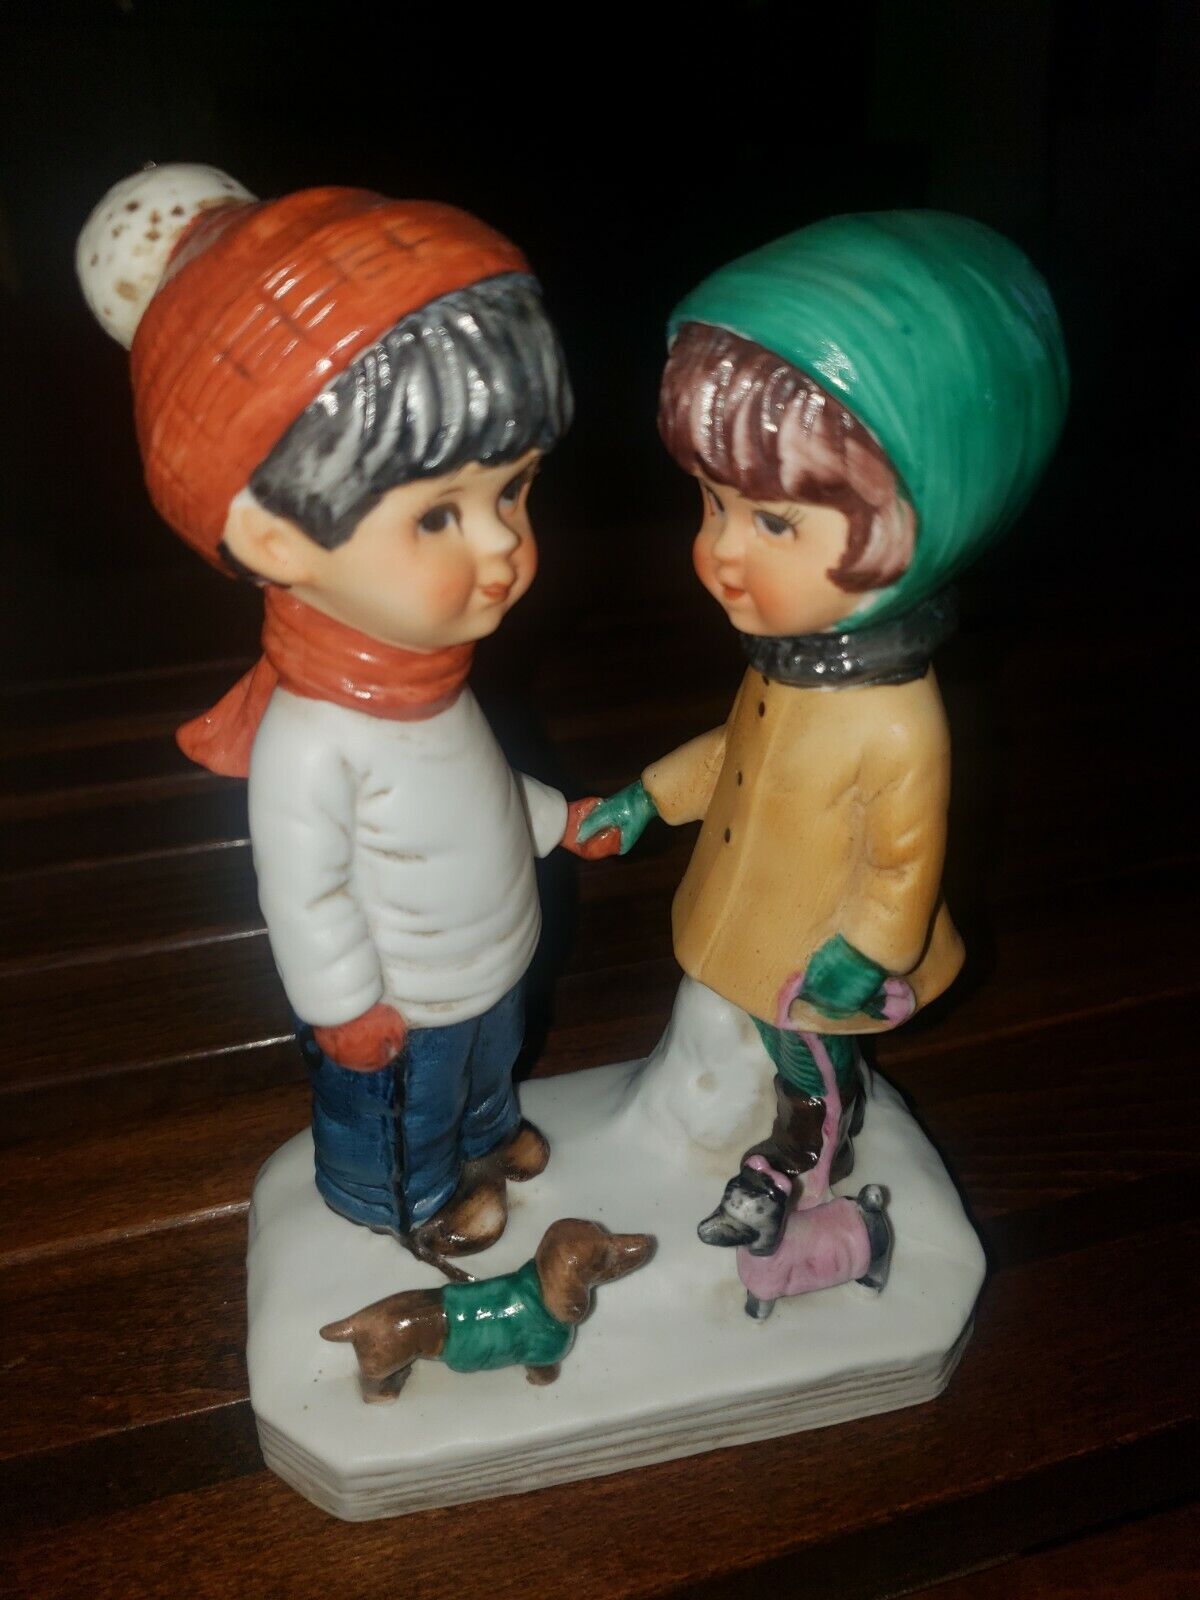 Moppets 1975 MAR Winter figurine boy & girl Gorham made in Japan ceramic